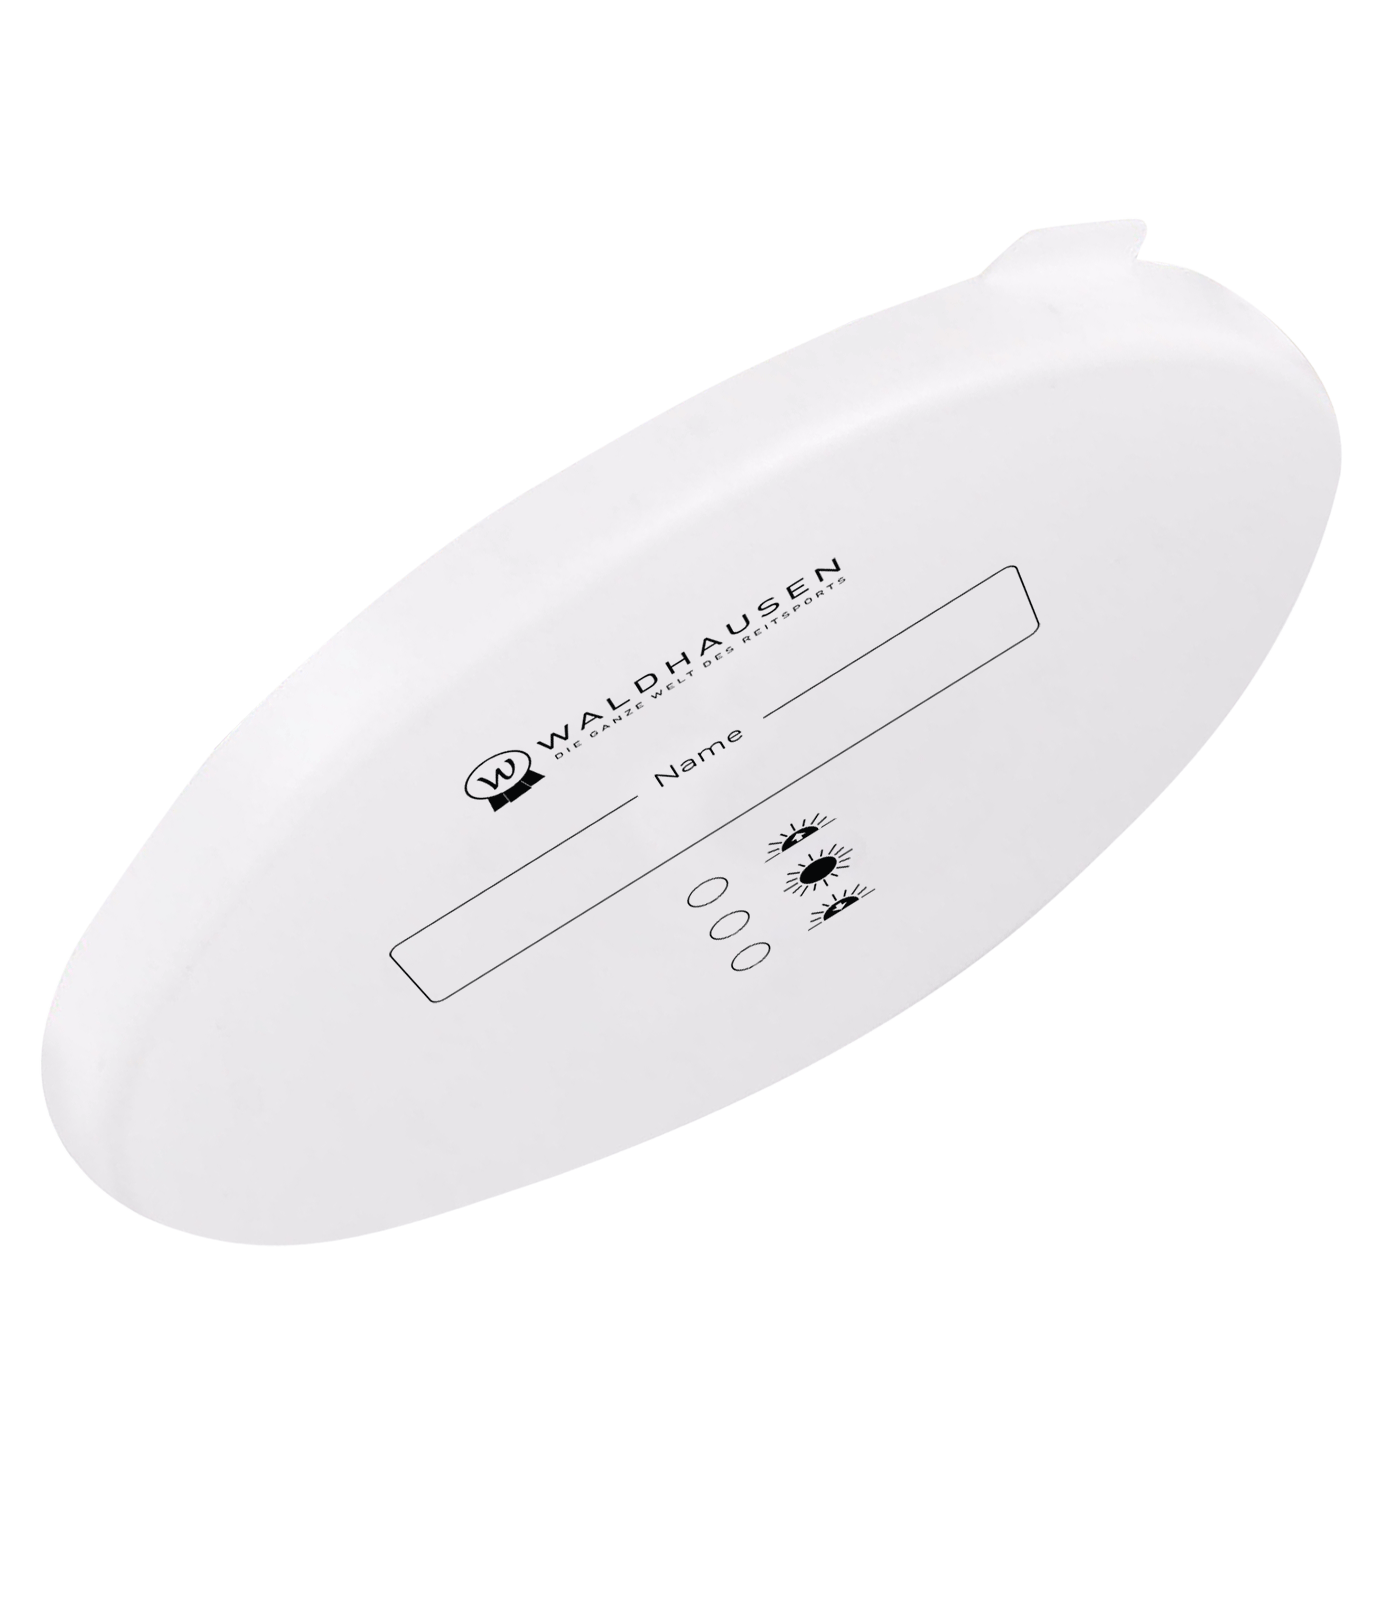 White lid, single for 15016. Treats bowl